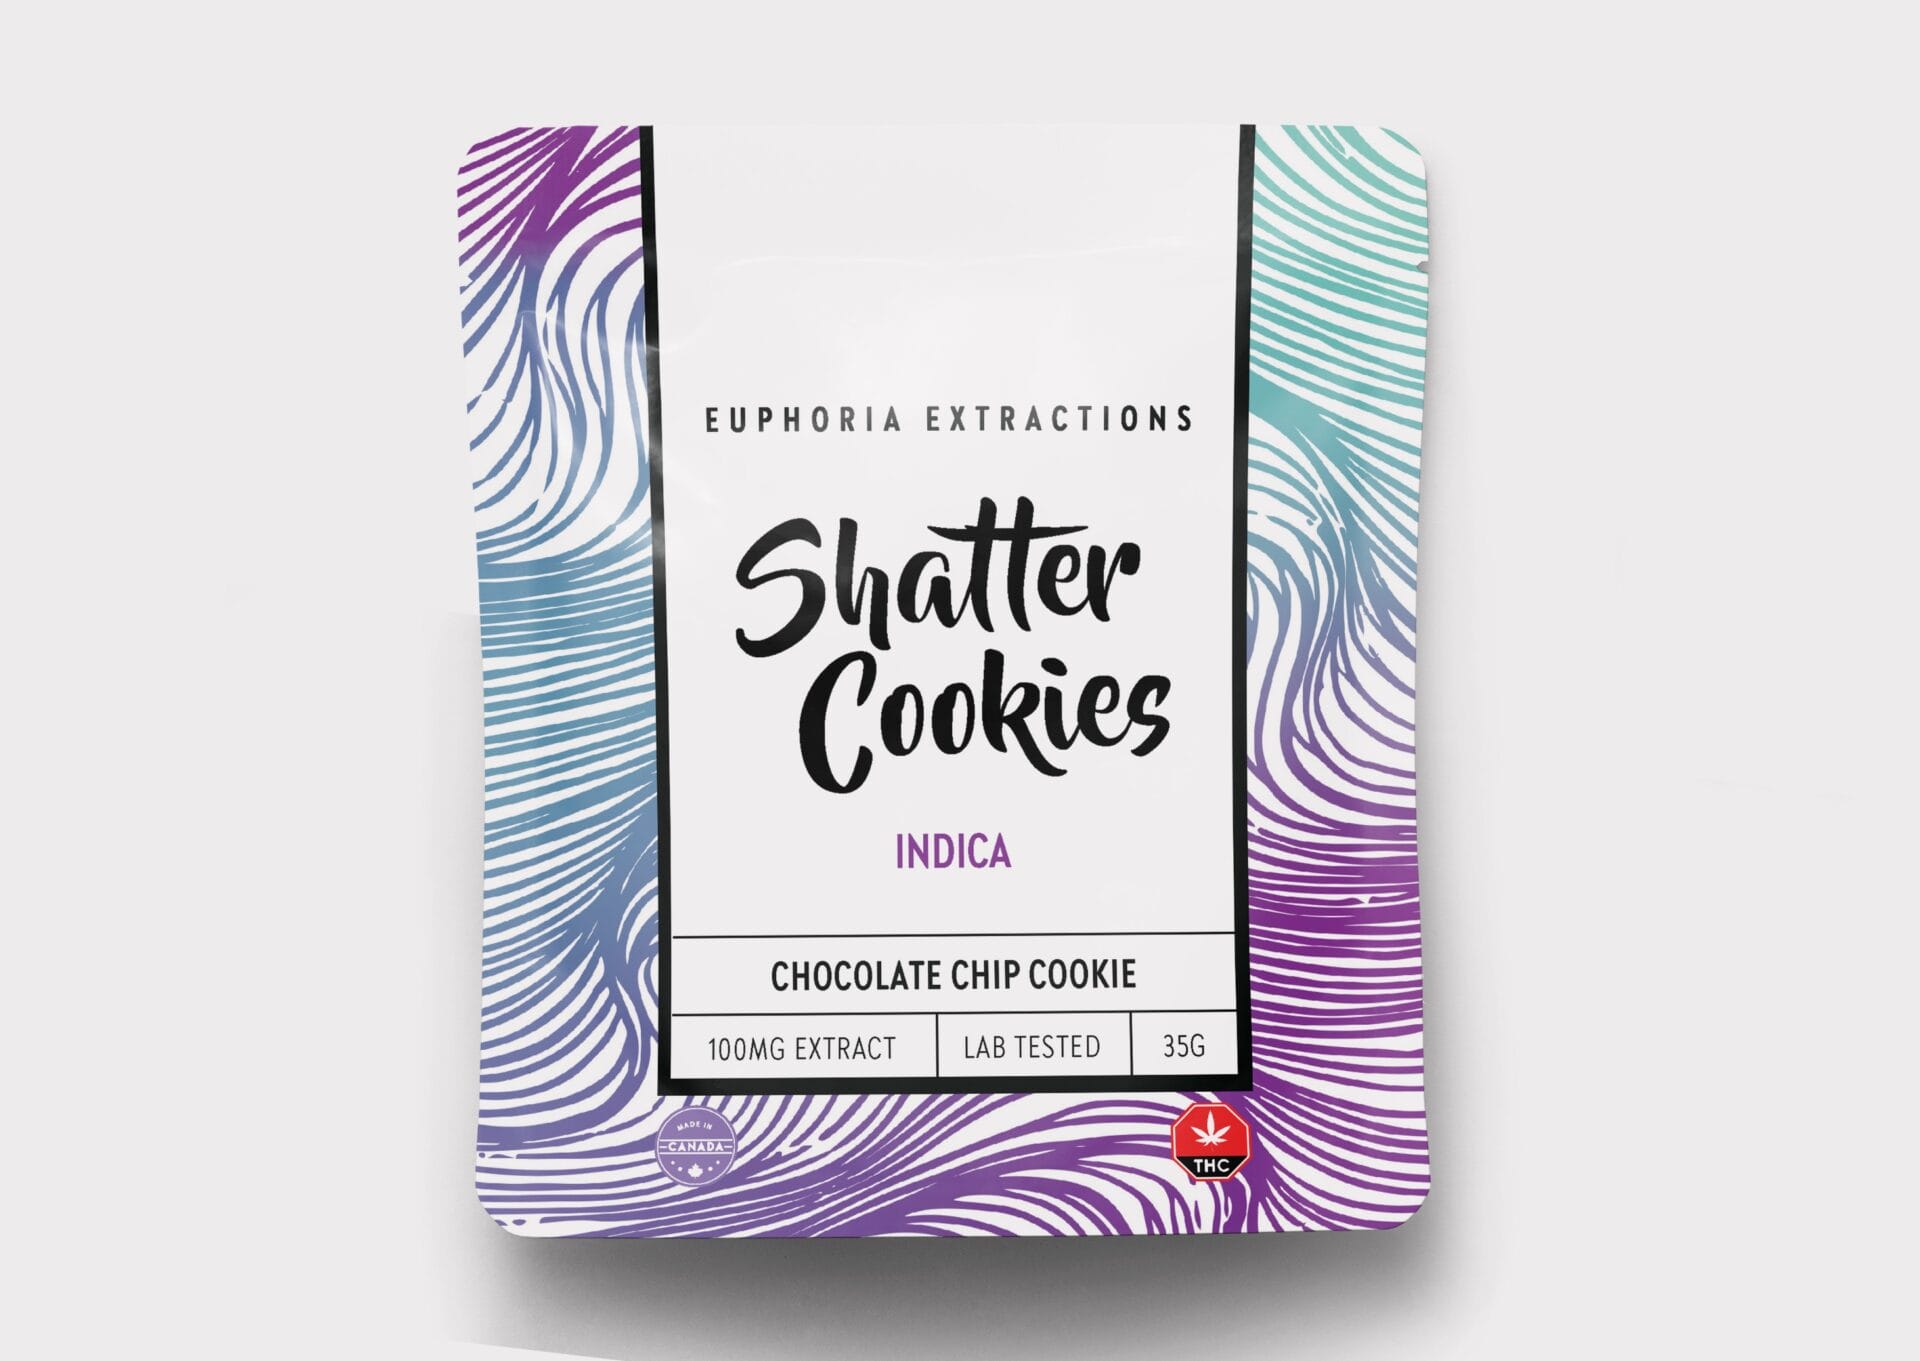 Euphoria Extractions - Shatter Cookies - Chocolate Chip Cookies - Indica